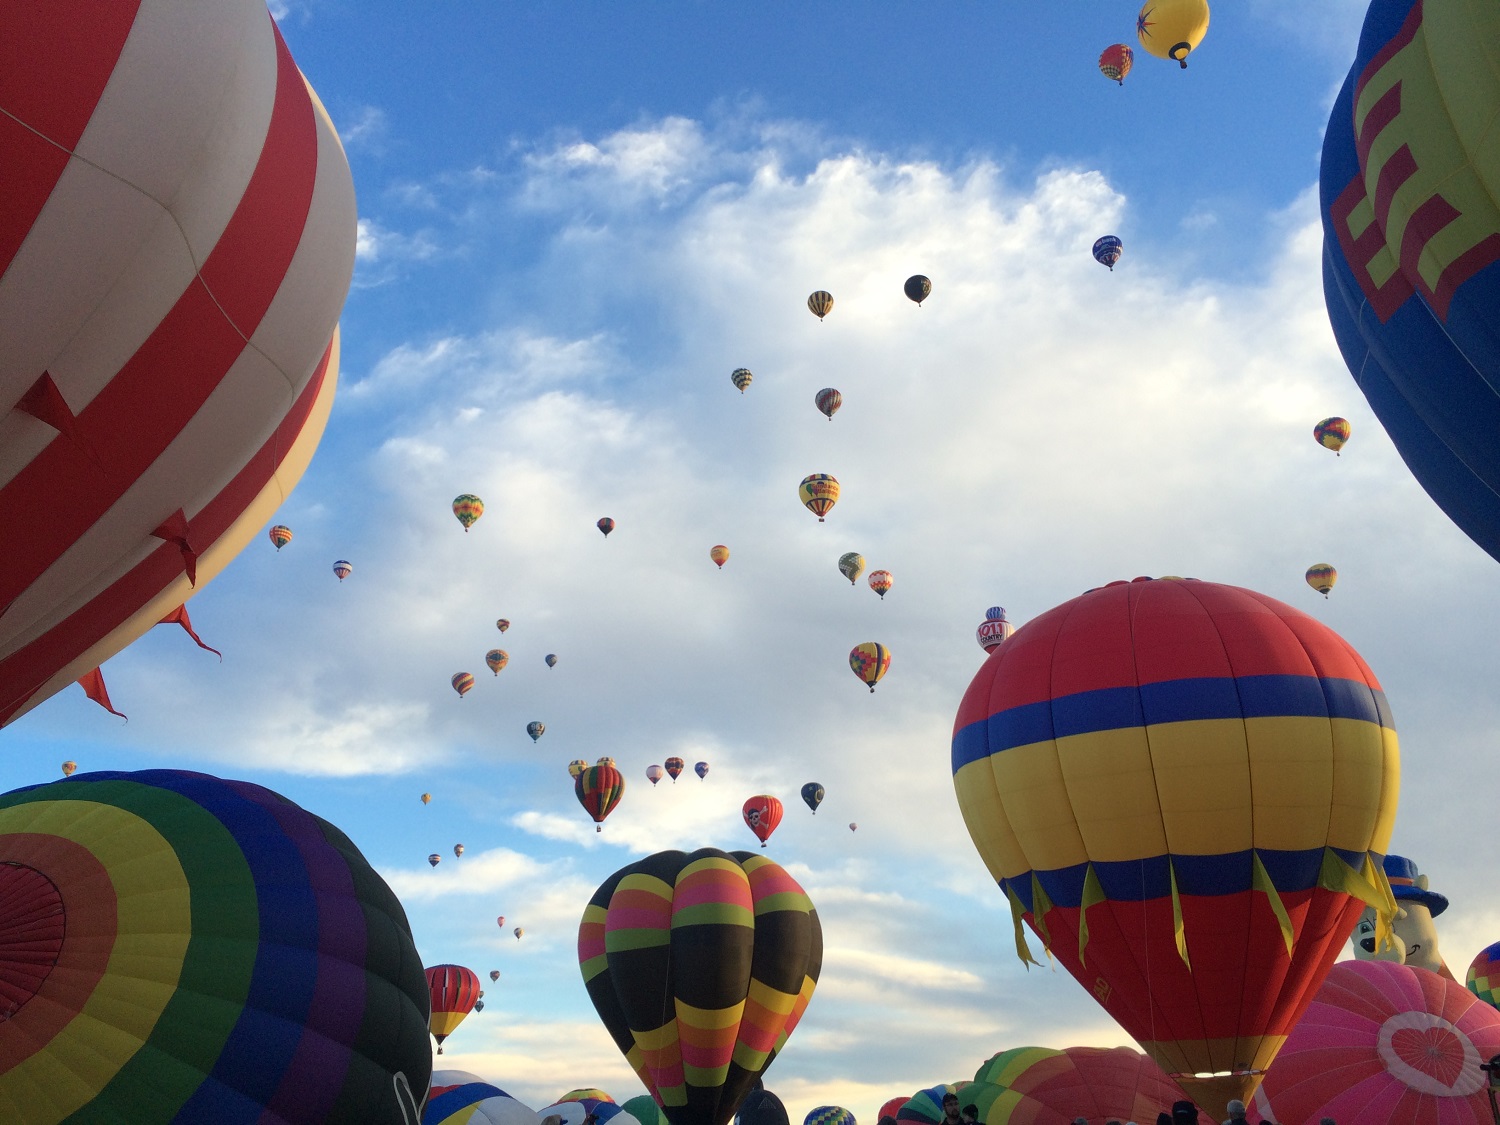 Views from the Albuquerque International Balloon Fiesta